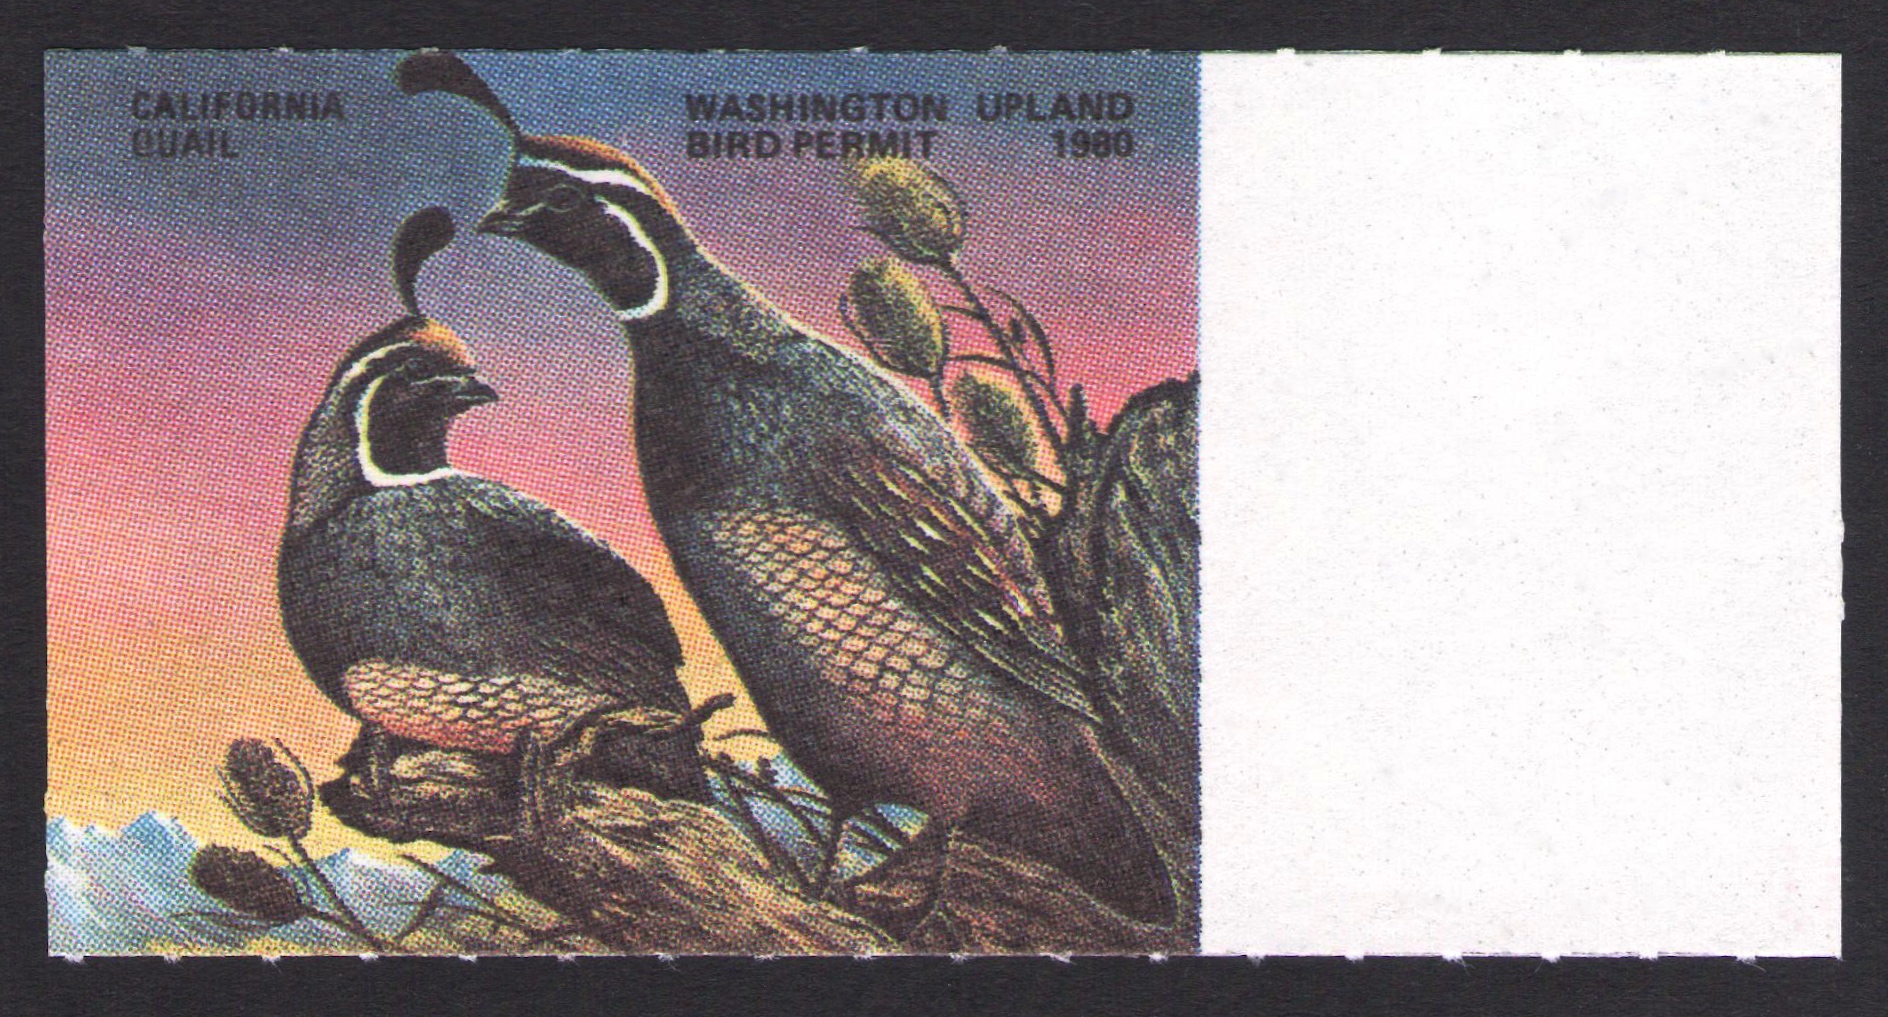 1980 Washington Upland Error - Wording and Serial # Missing